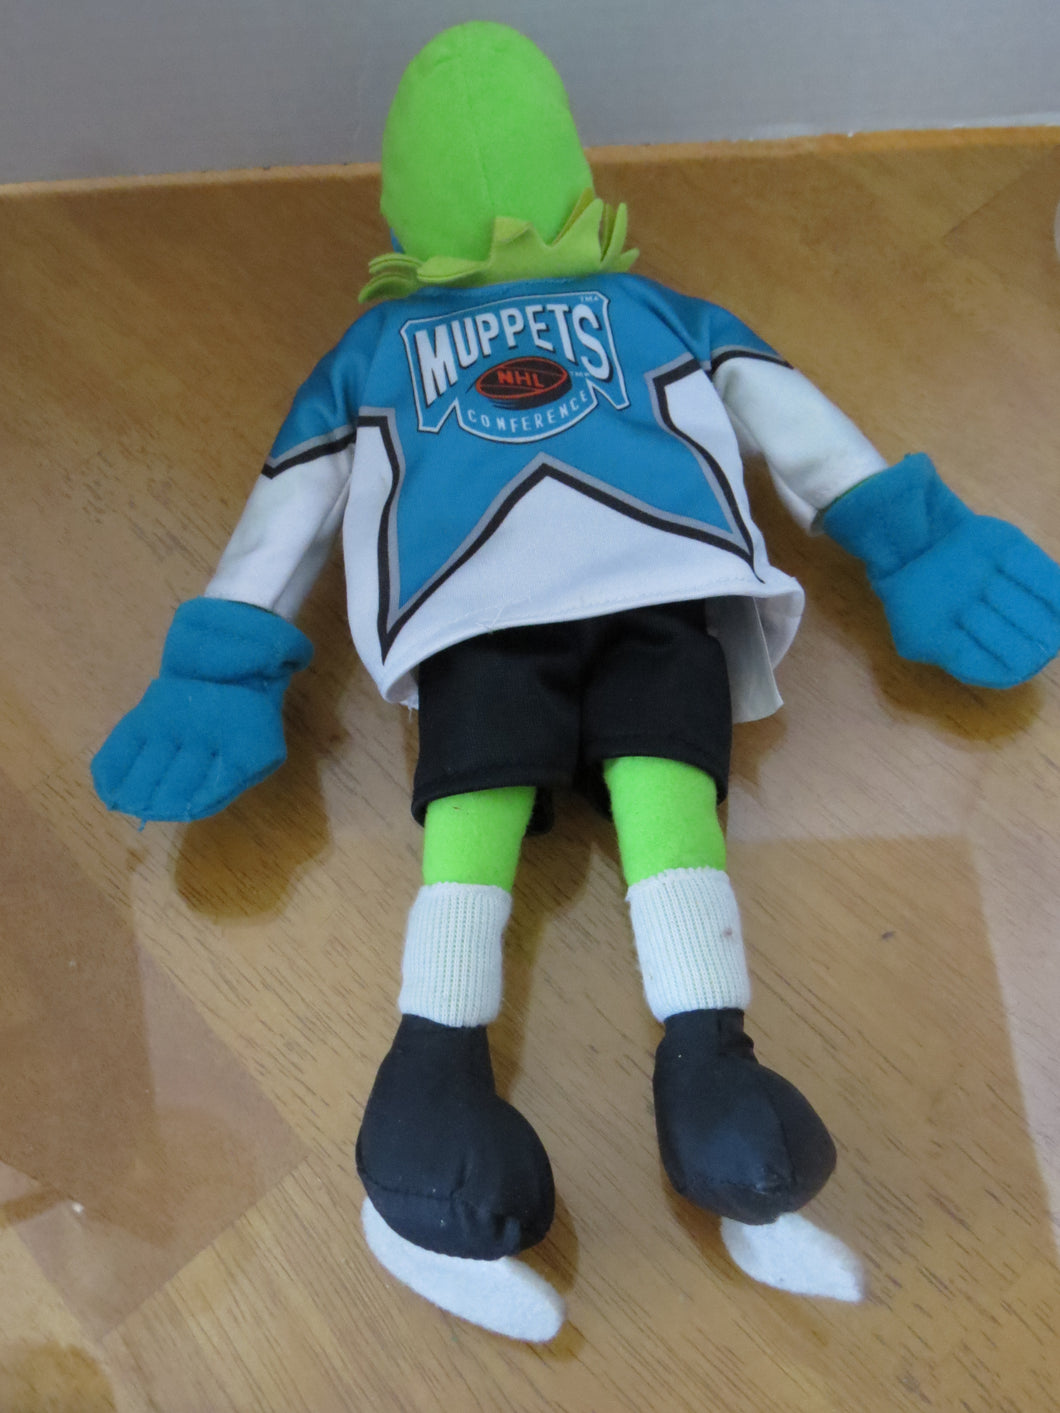 McDonalds NHL Henson MUPPETS - KERMITT HOCKEY PLAYER - plush doll 10''tall